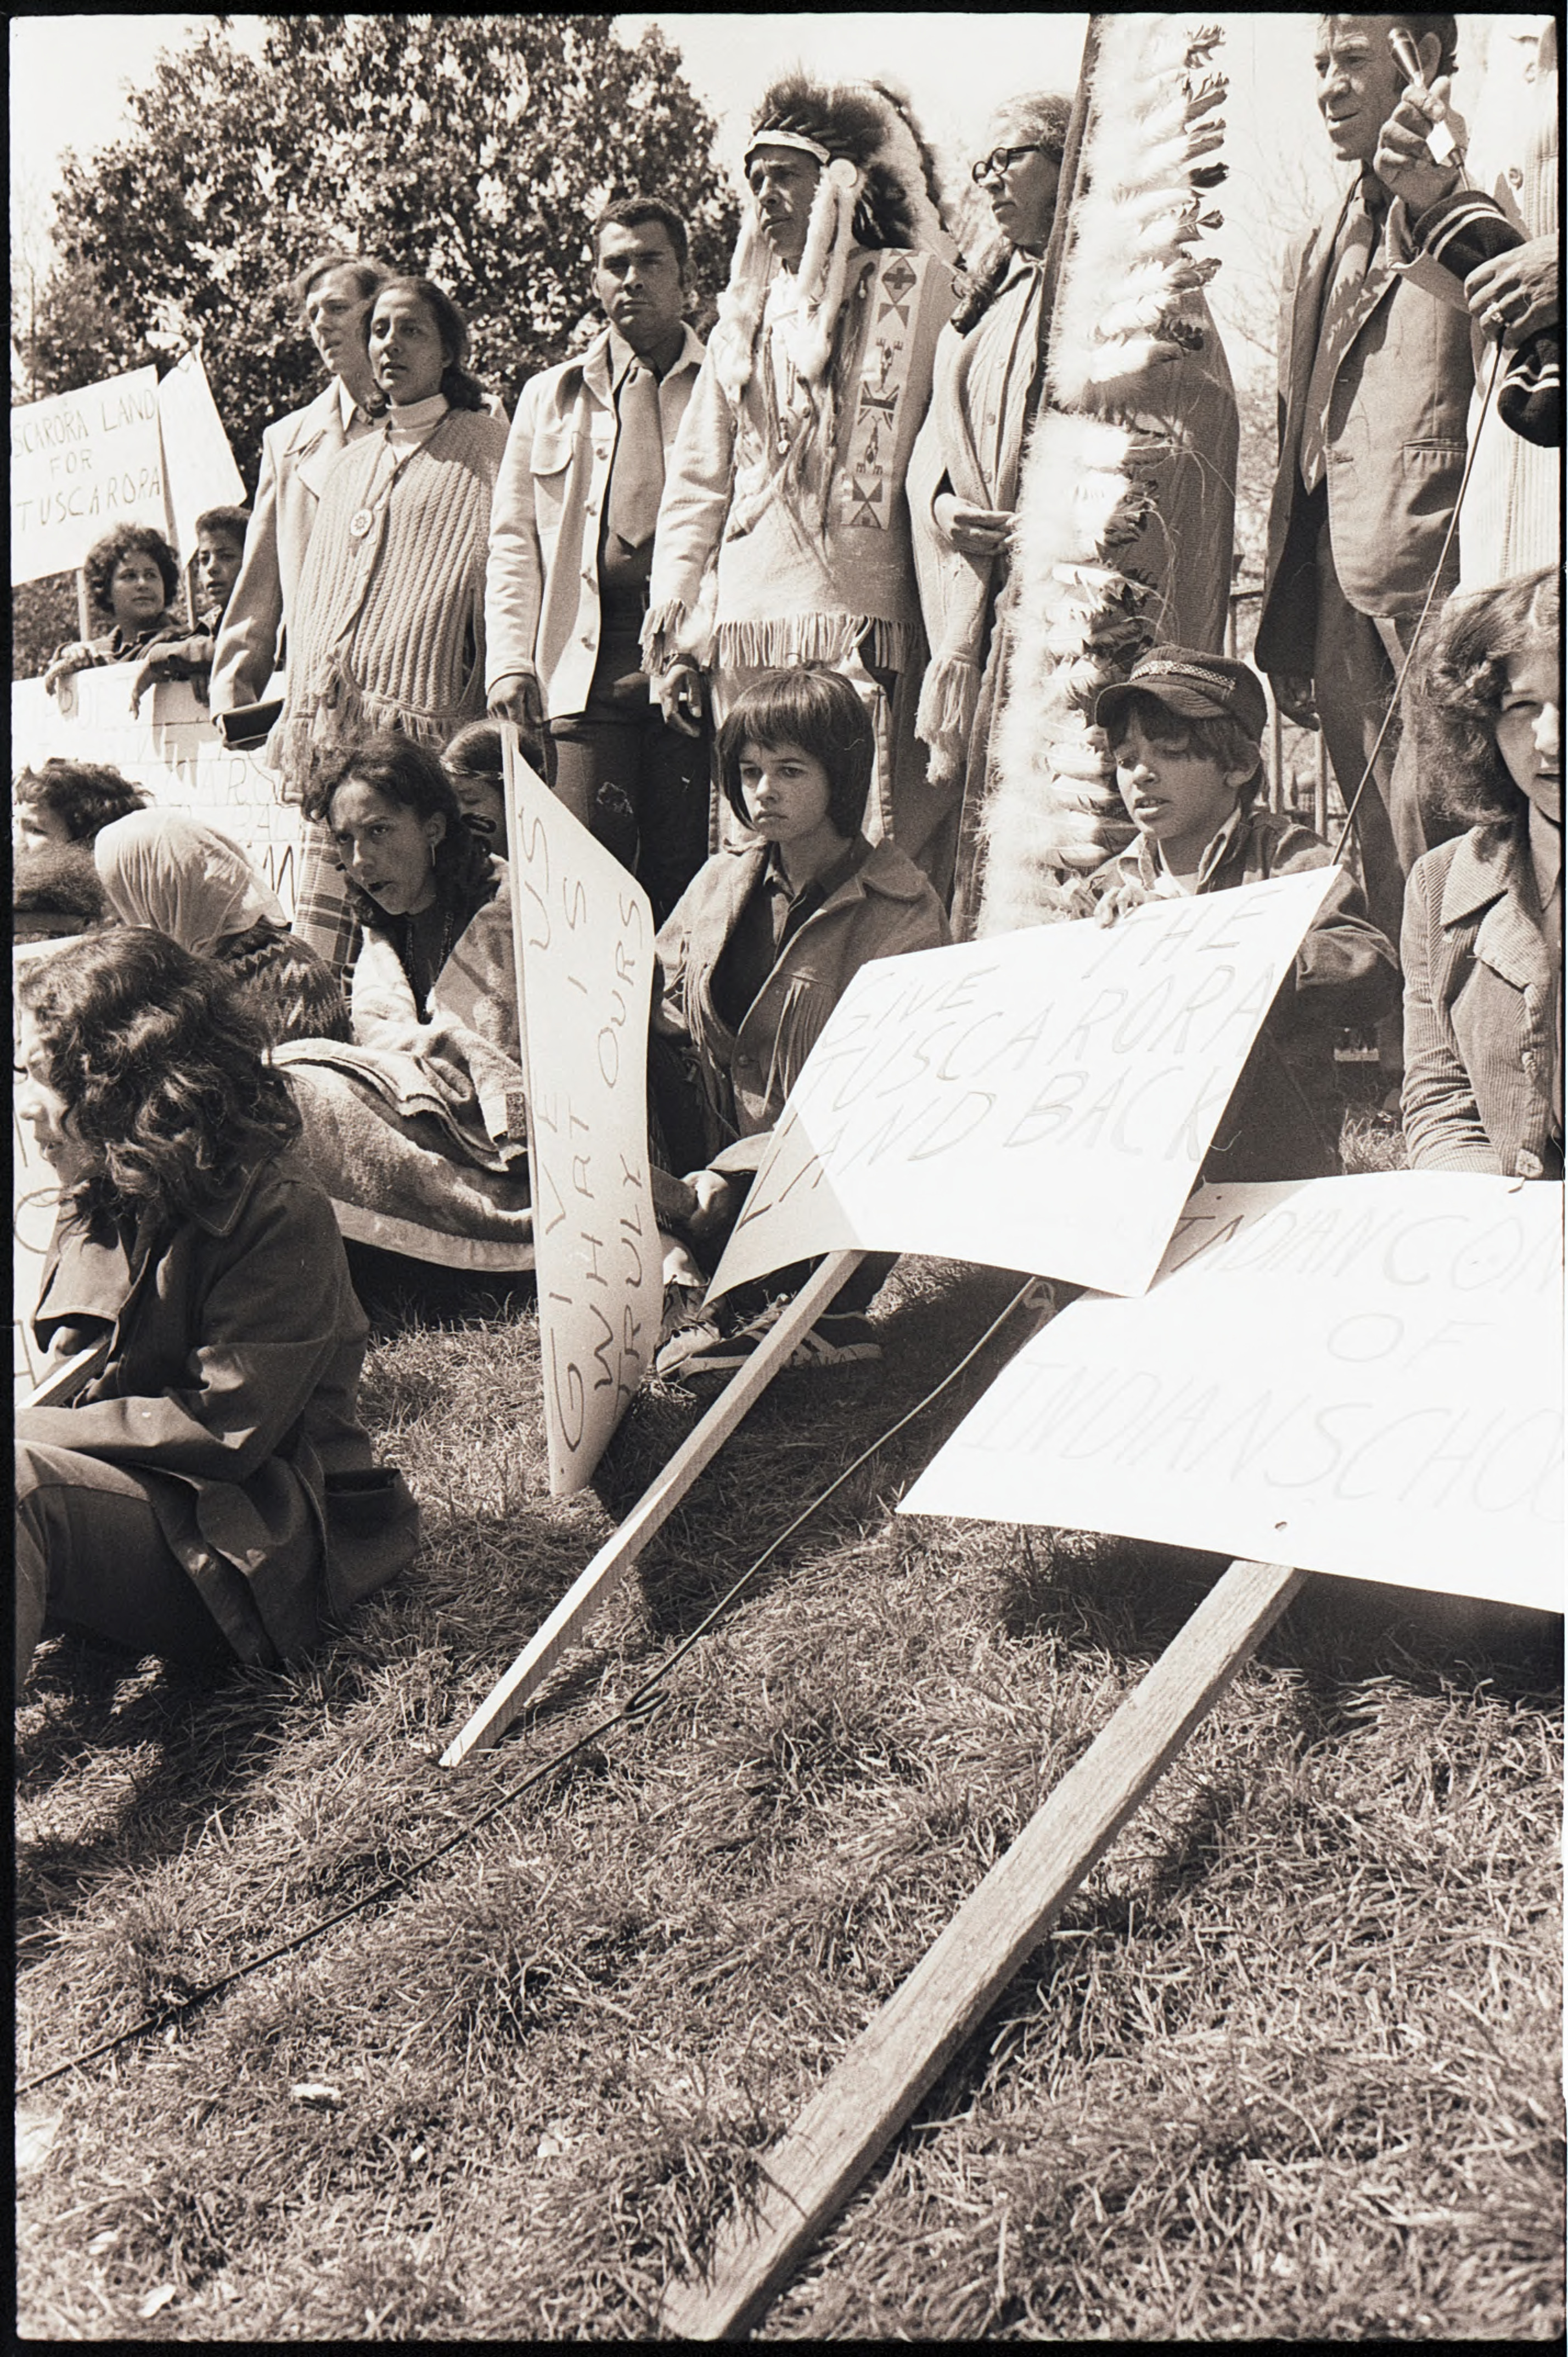 Tuscarora Protest of 1973